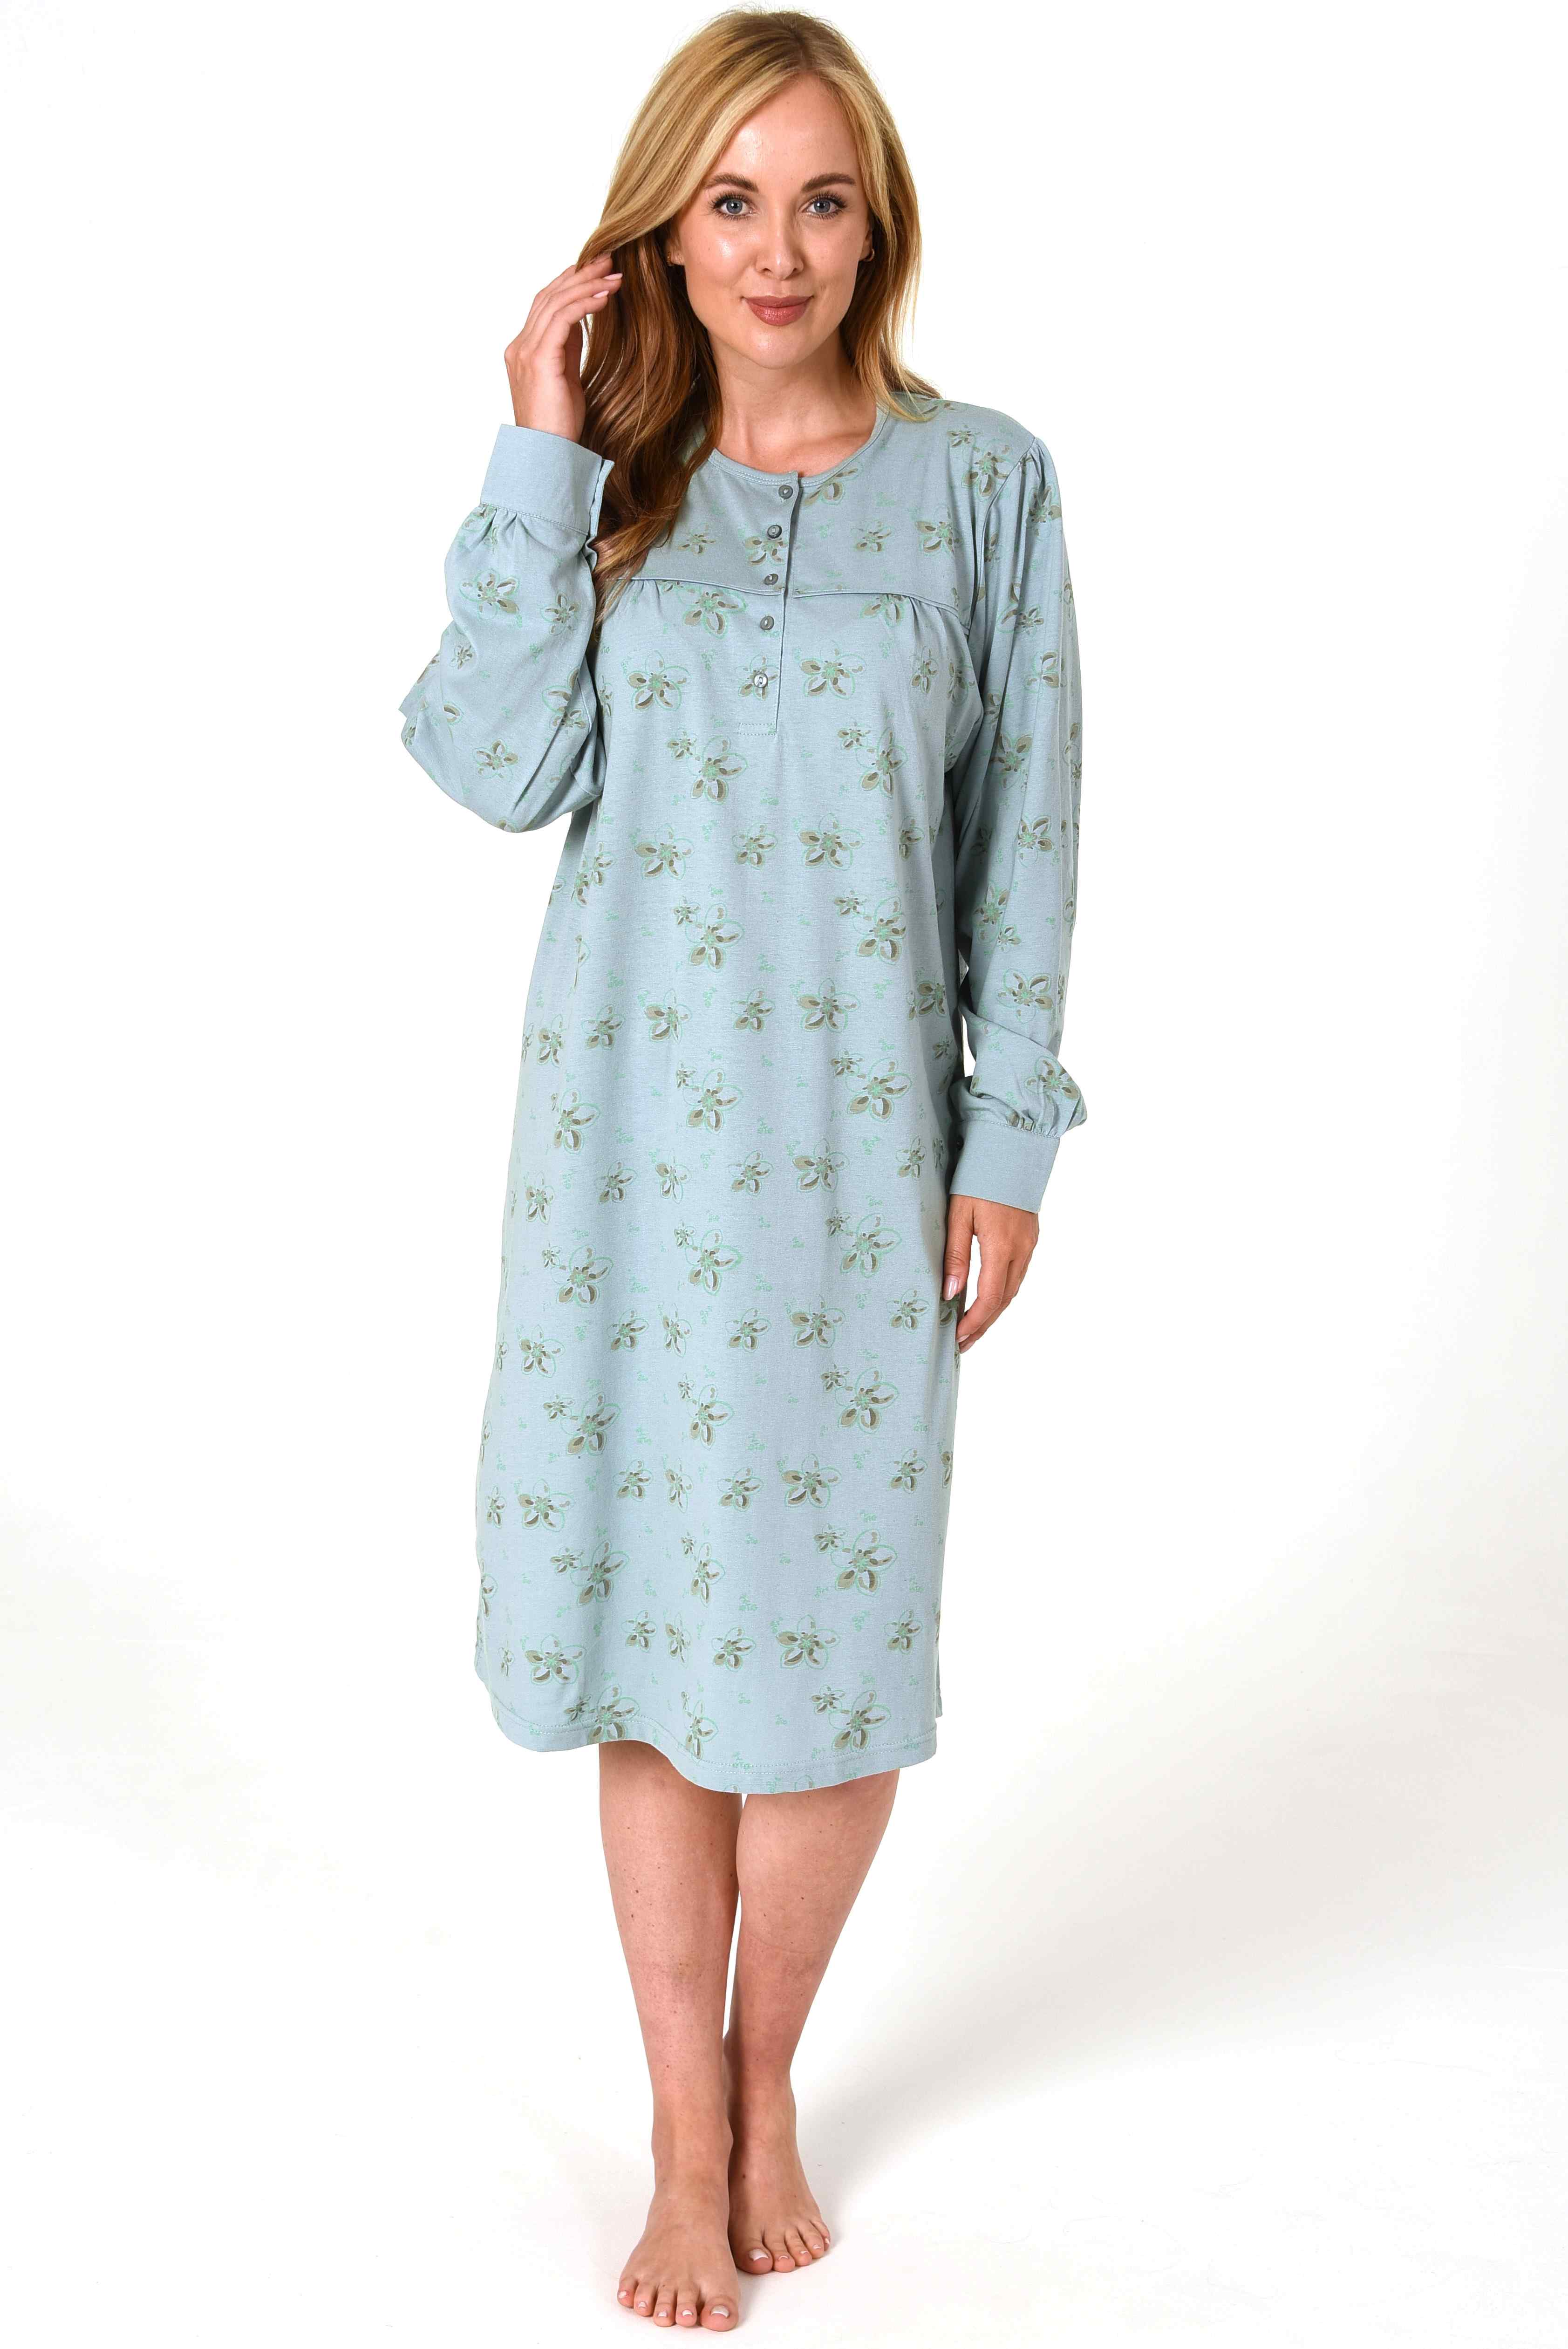 normann dames nachthemd Jeanette 68135 - Groen - M 40/42